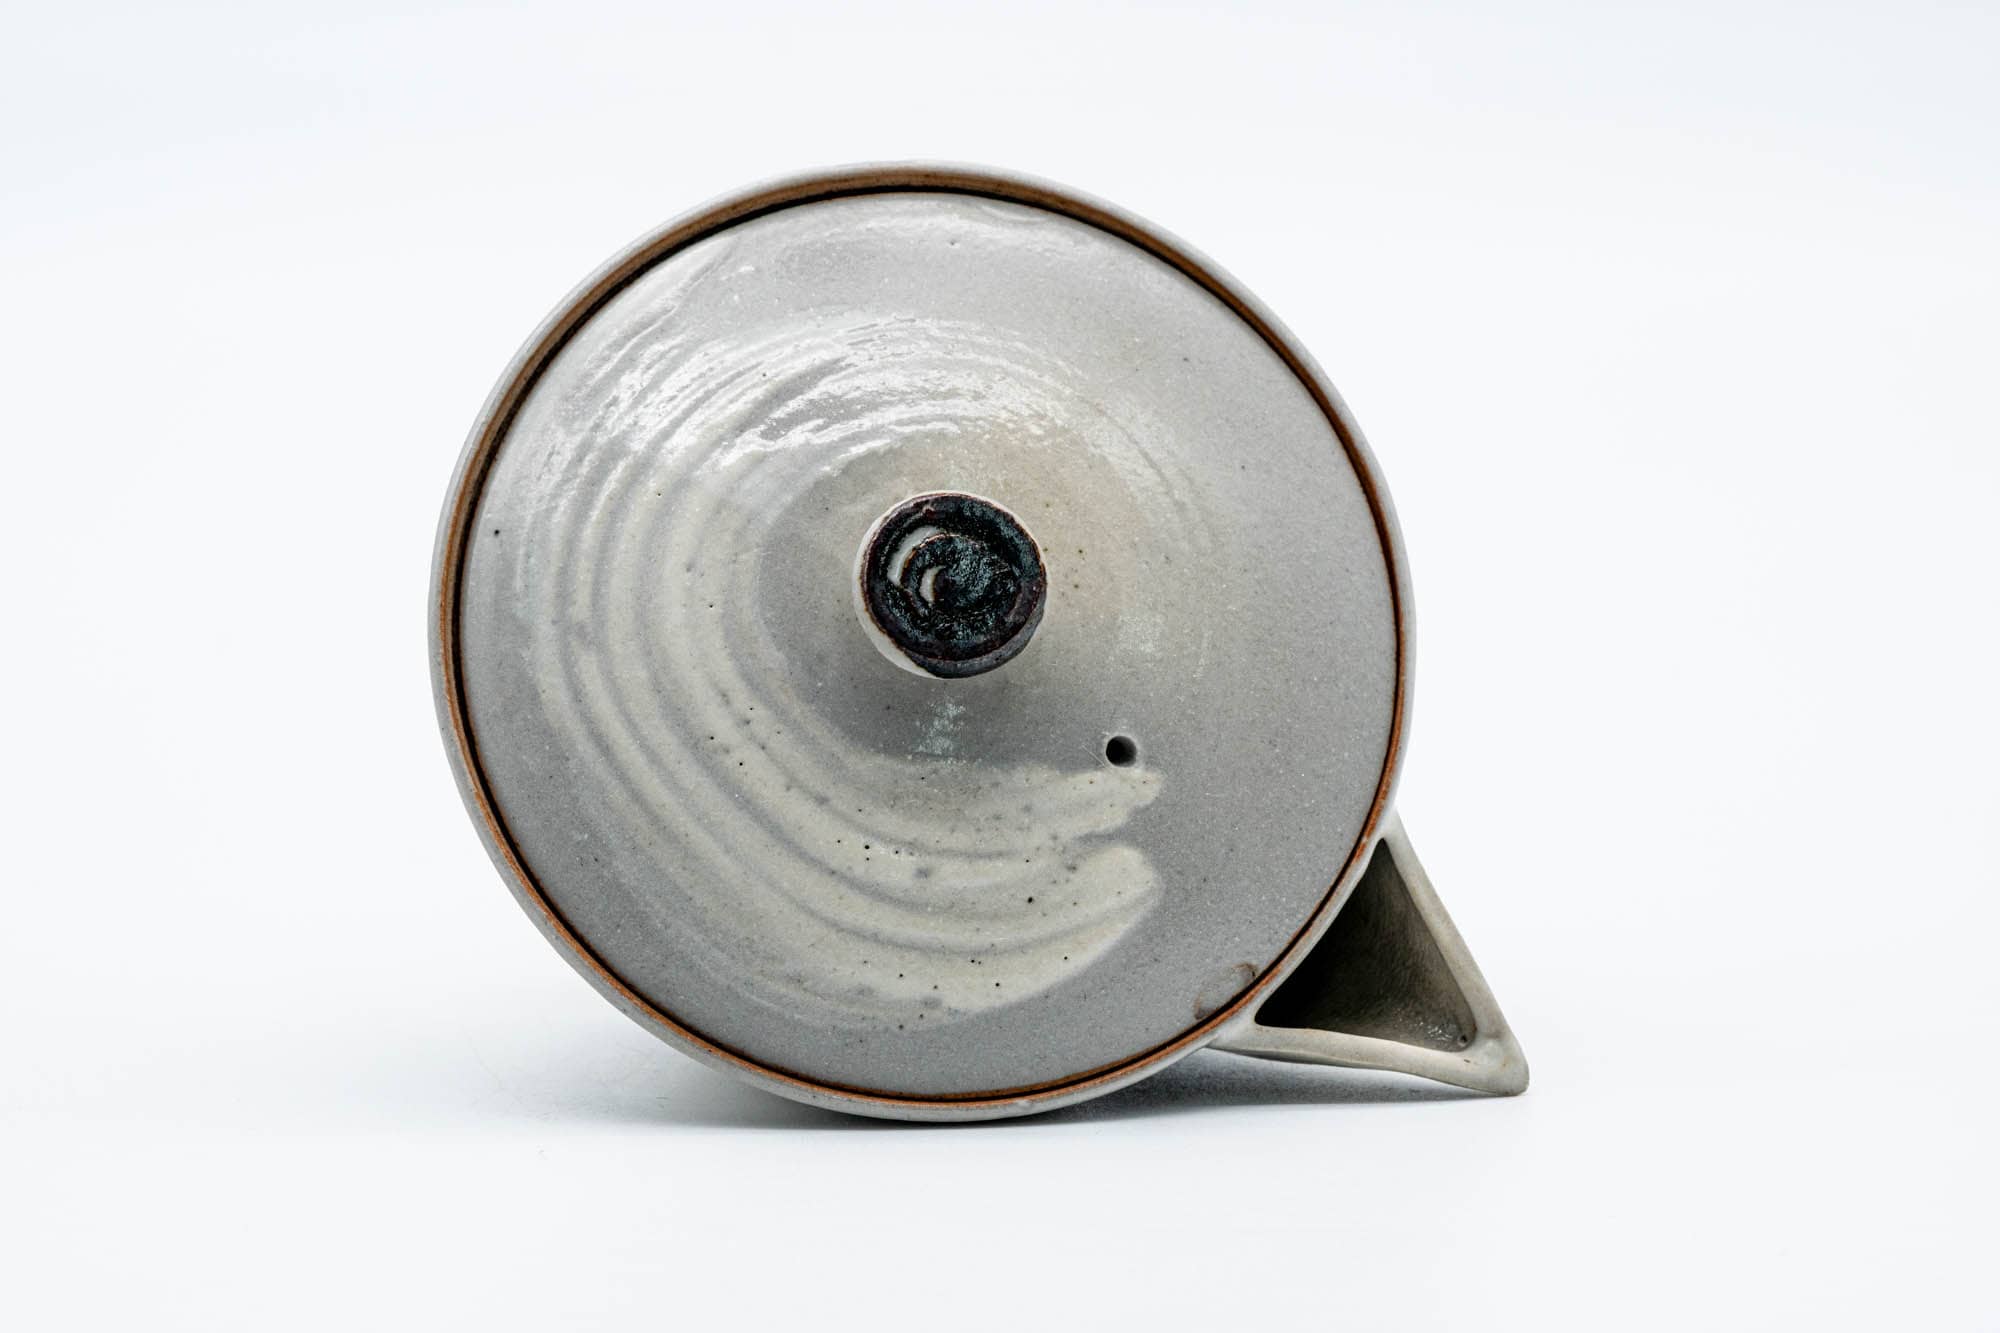 Japanese Houhin - Weathered Grey White Hakeme Glazed Clay Teapot - 80ml